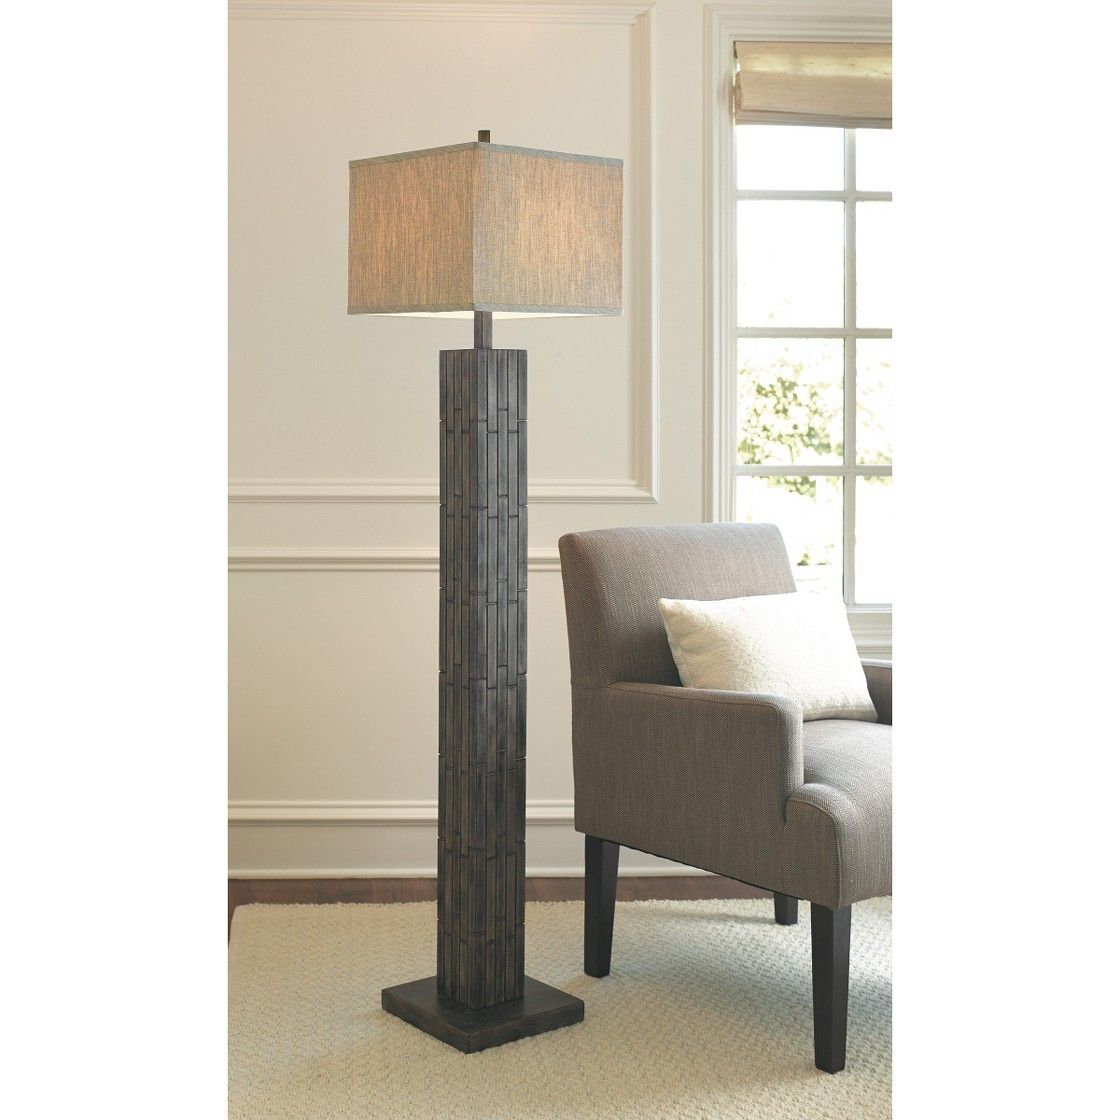 For The Living Room Threshold Floor Lamp Mosaic Wood regarding size 1120 X 1120